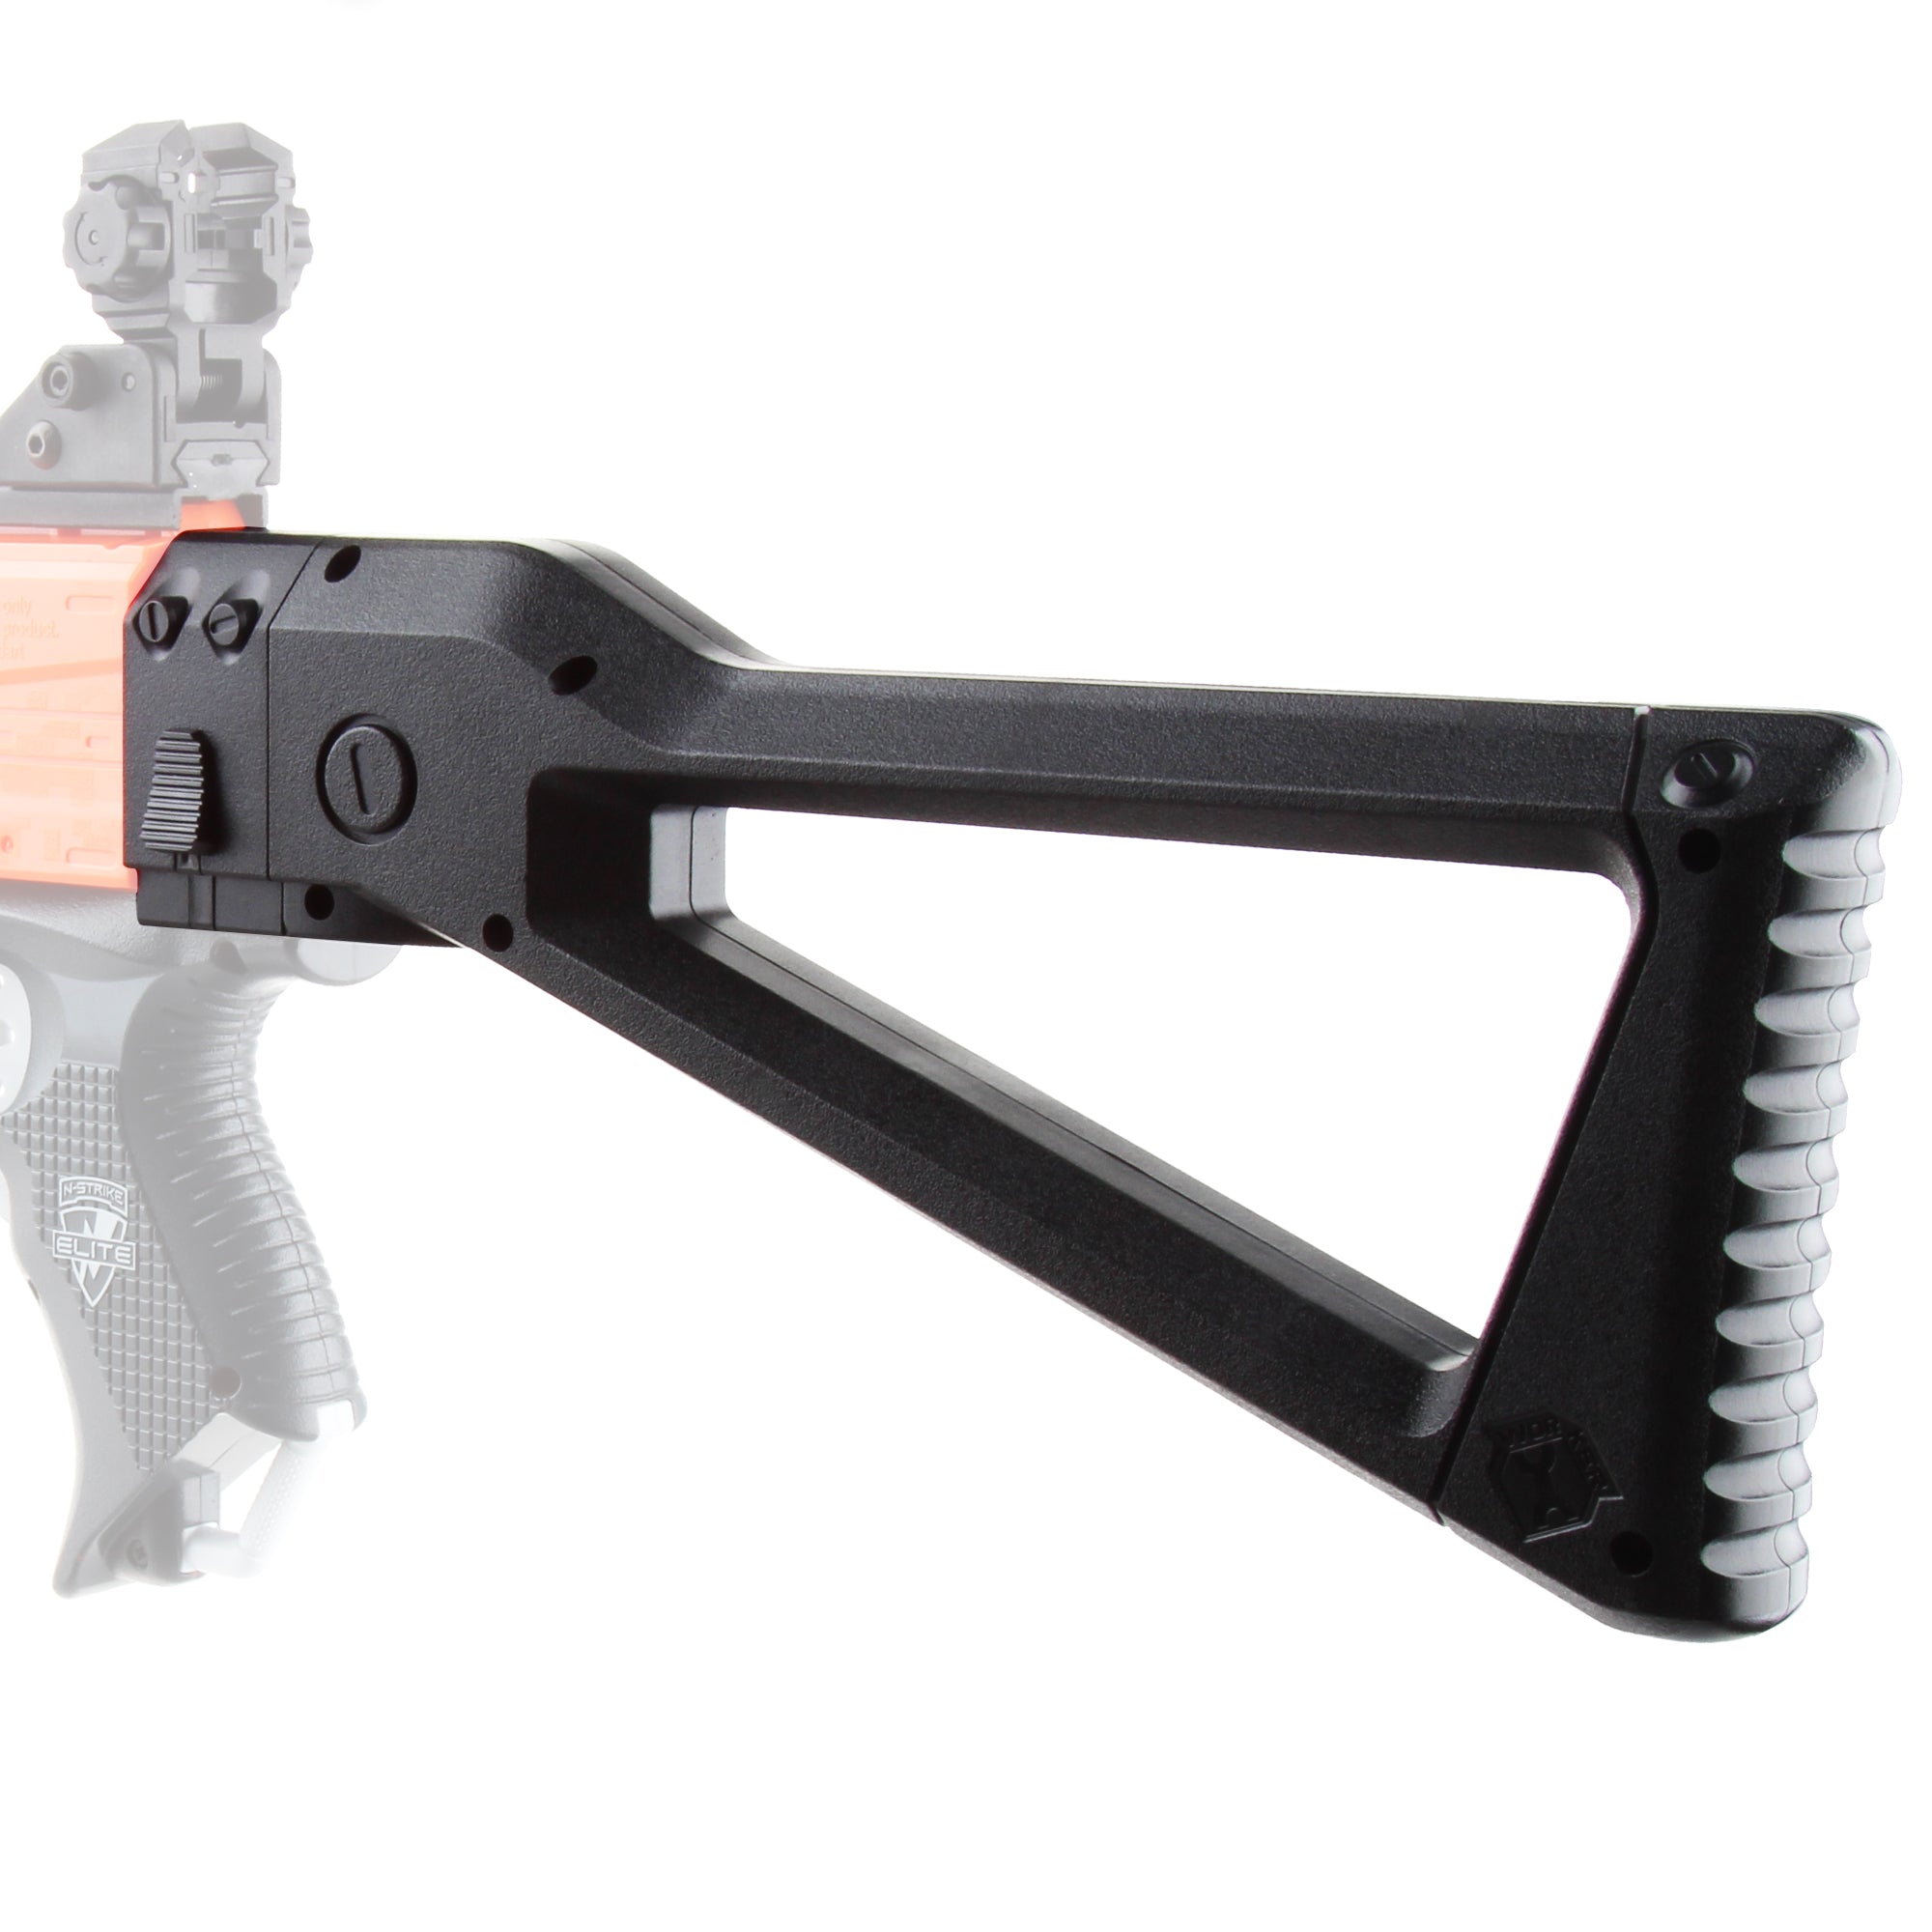 Worker Mod DIY Imitation DMR Kits D (AK Stock) Combo 11 Items for Nerf Stryfe Modify Toy - BlasterMOD